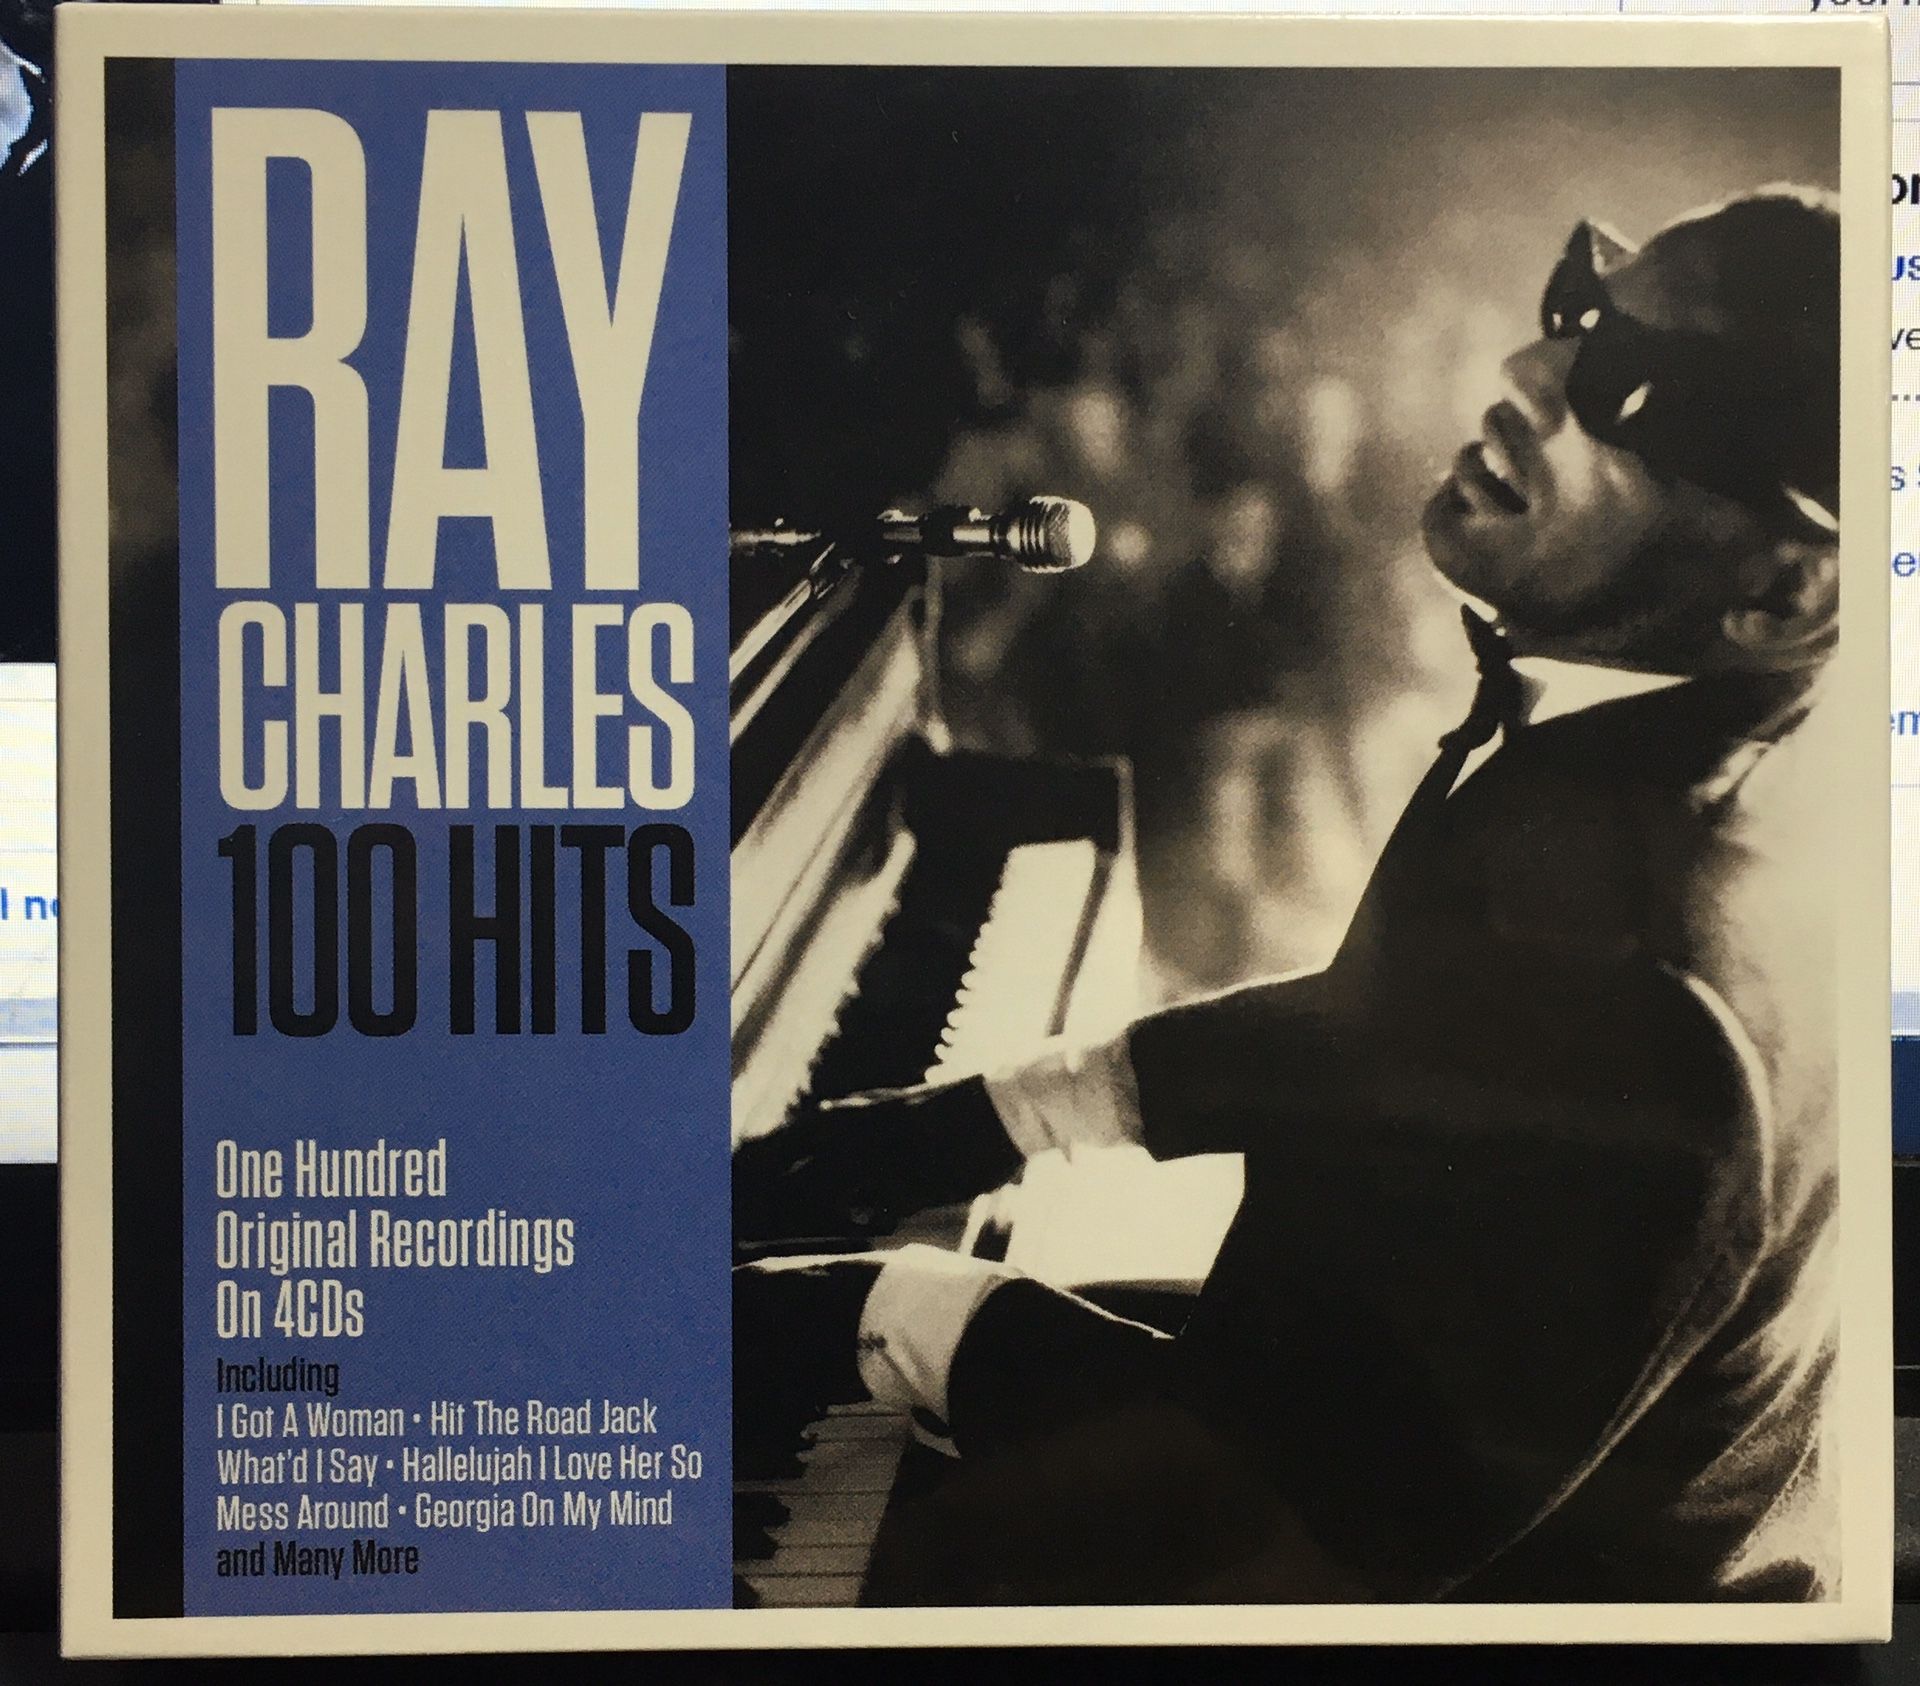 Ray Charles 100 hits 4xcd box set new sealed copy